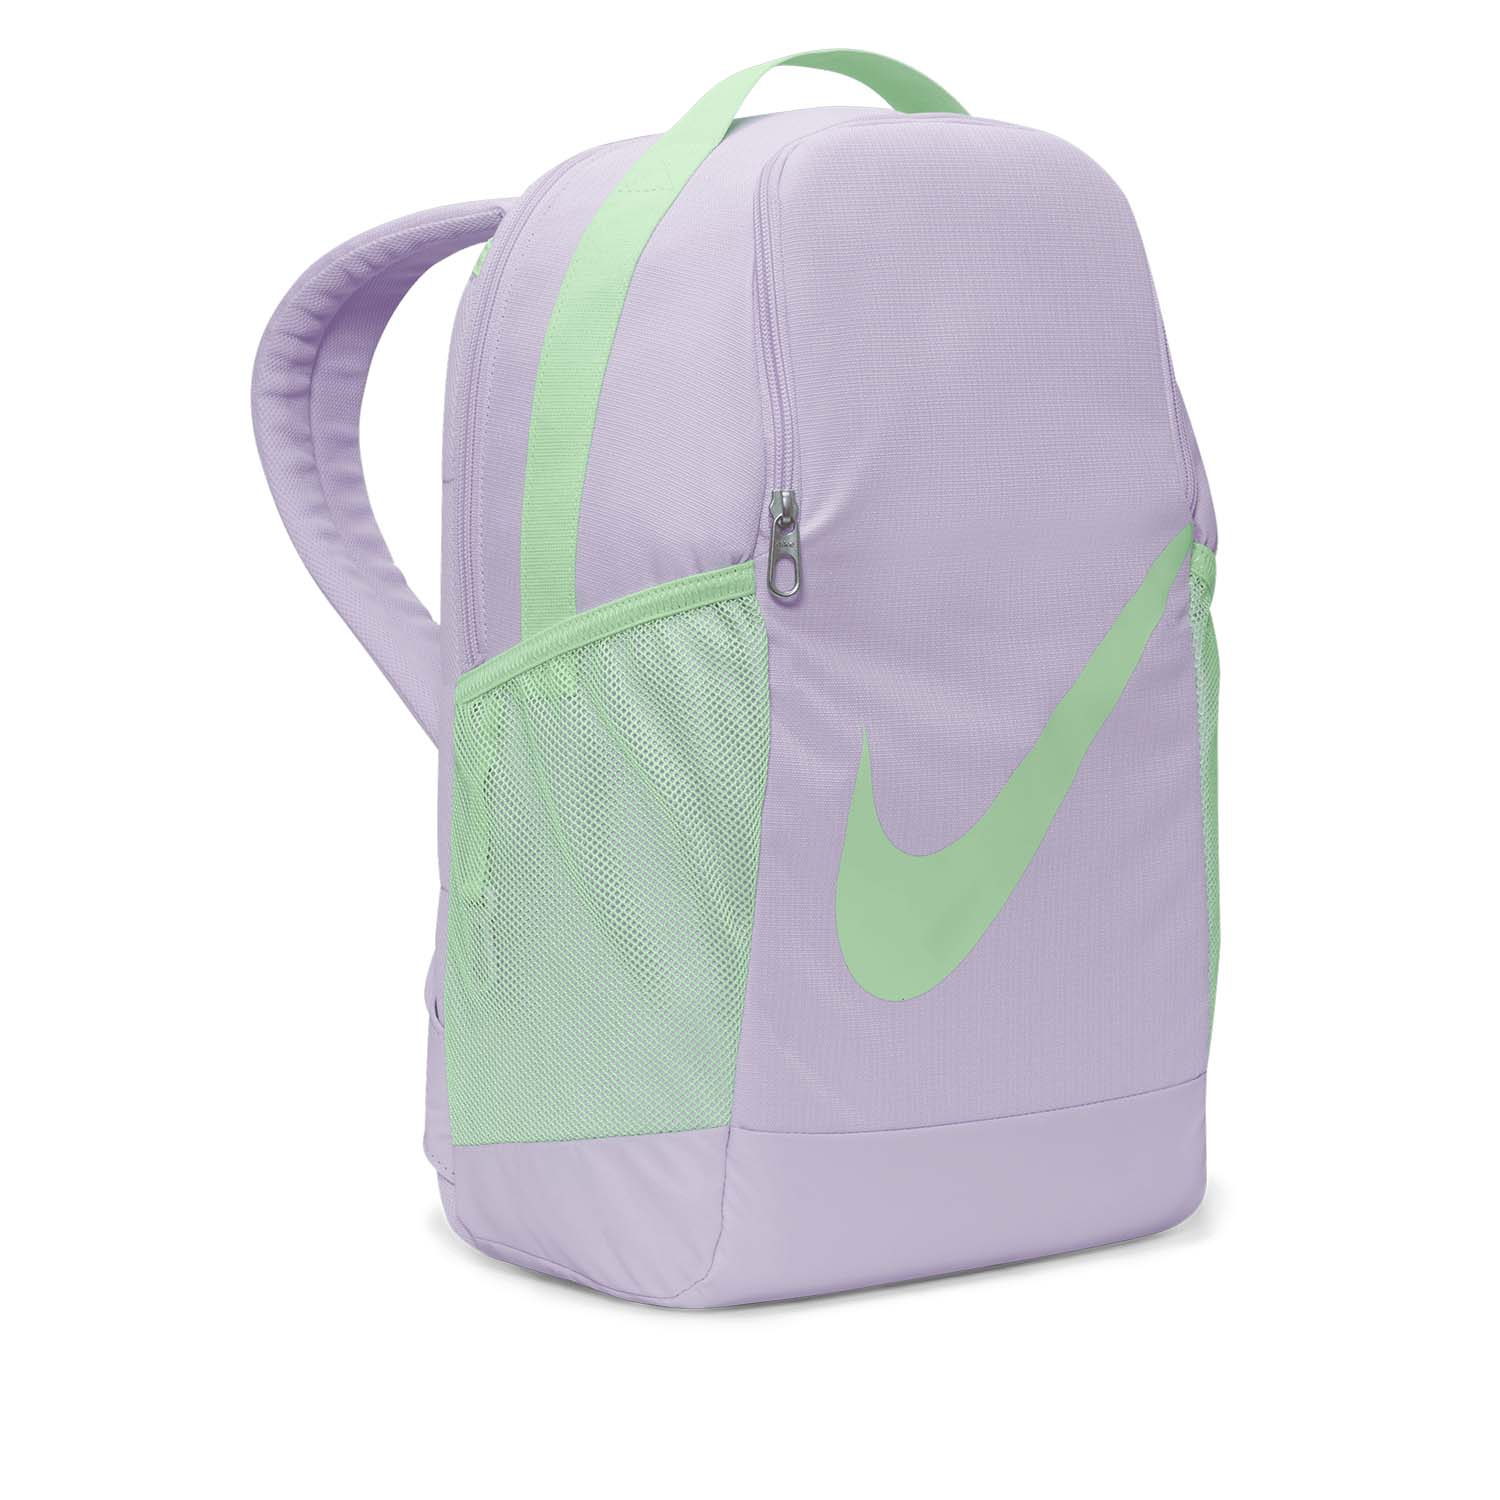 Nike Brasilia Zaino Bambini - Lilac Bloom/Vapor Green